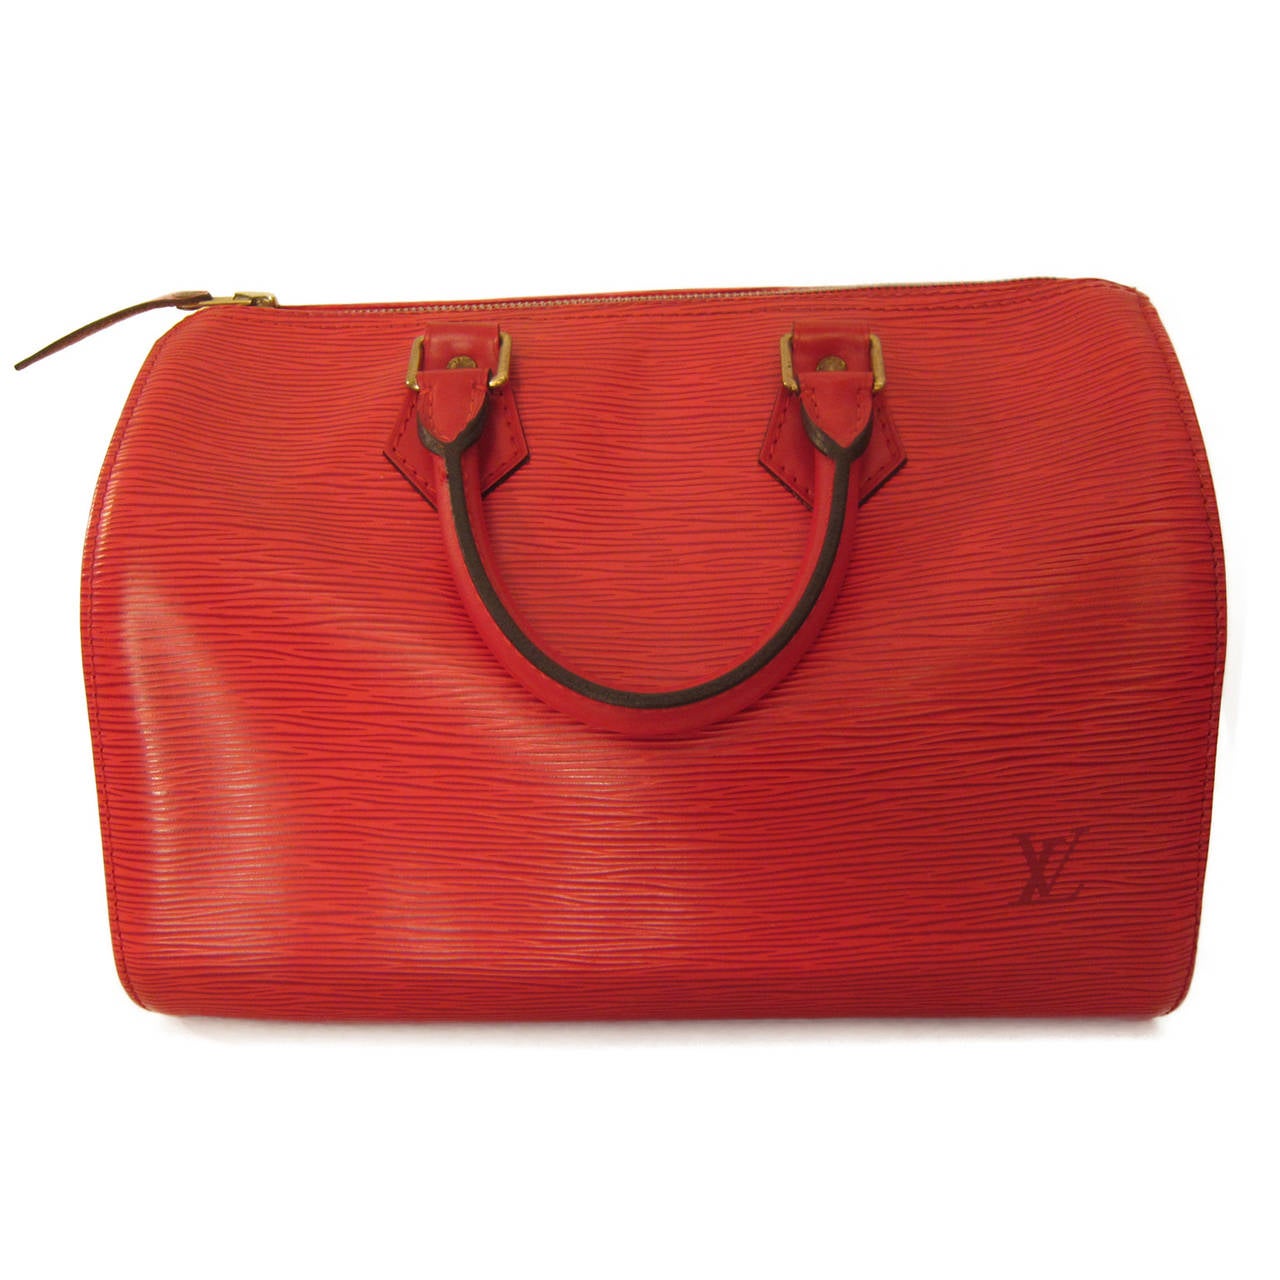 red handbag sale